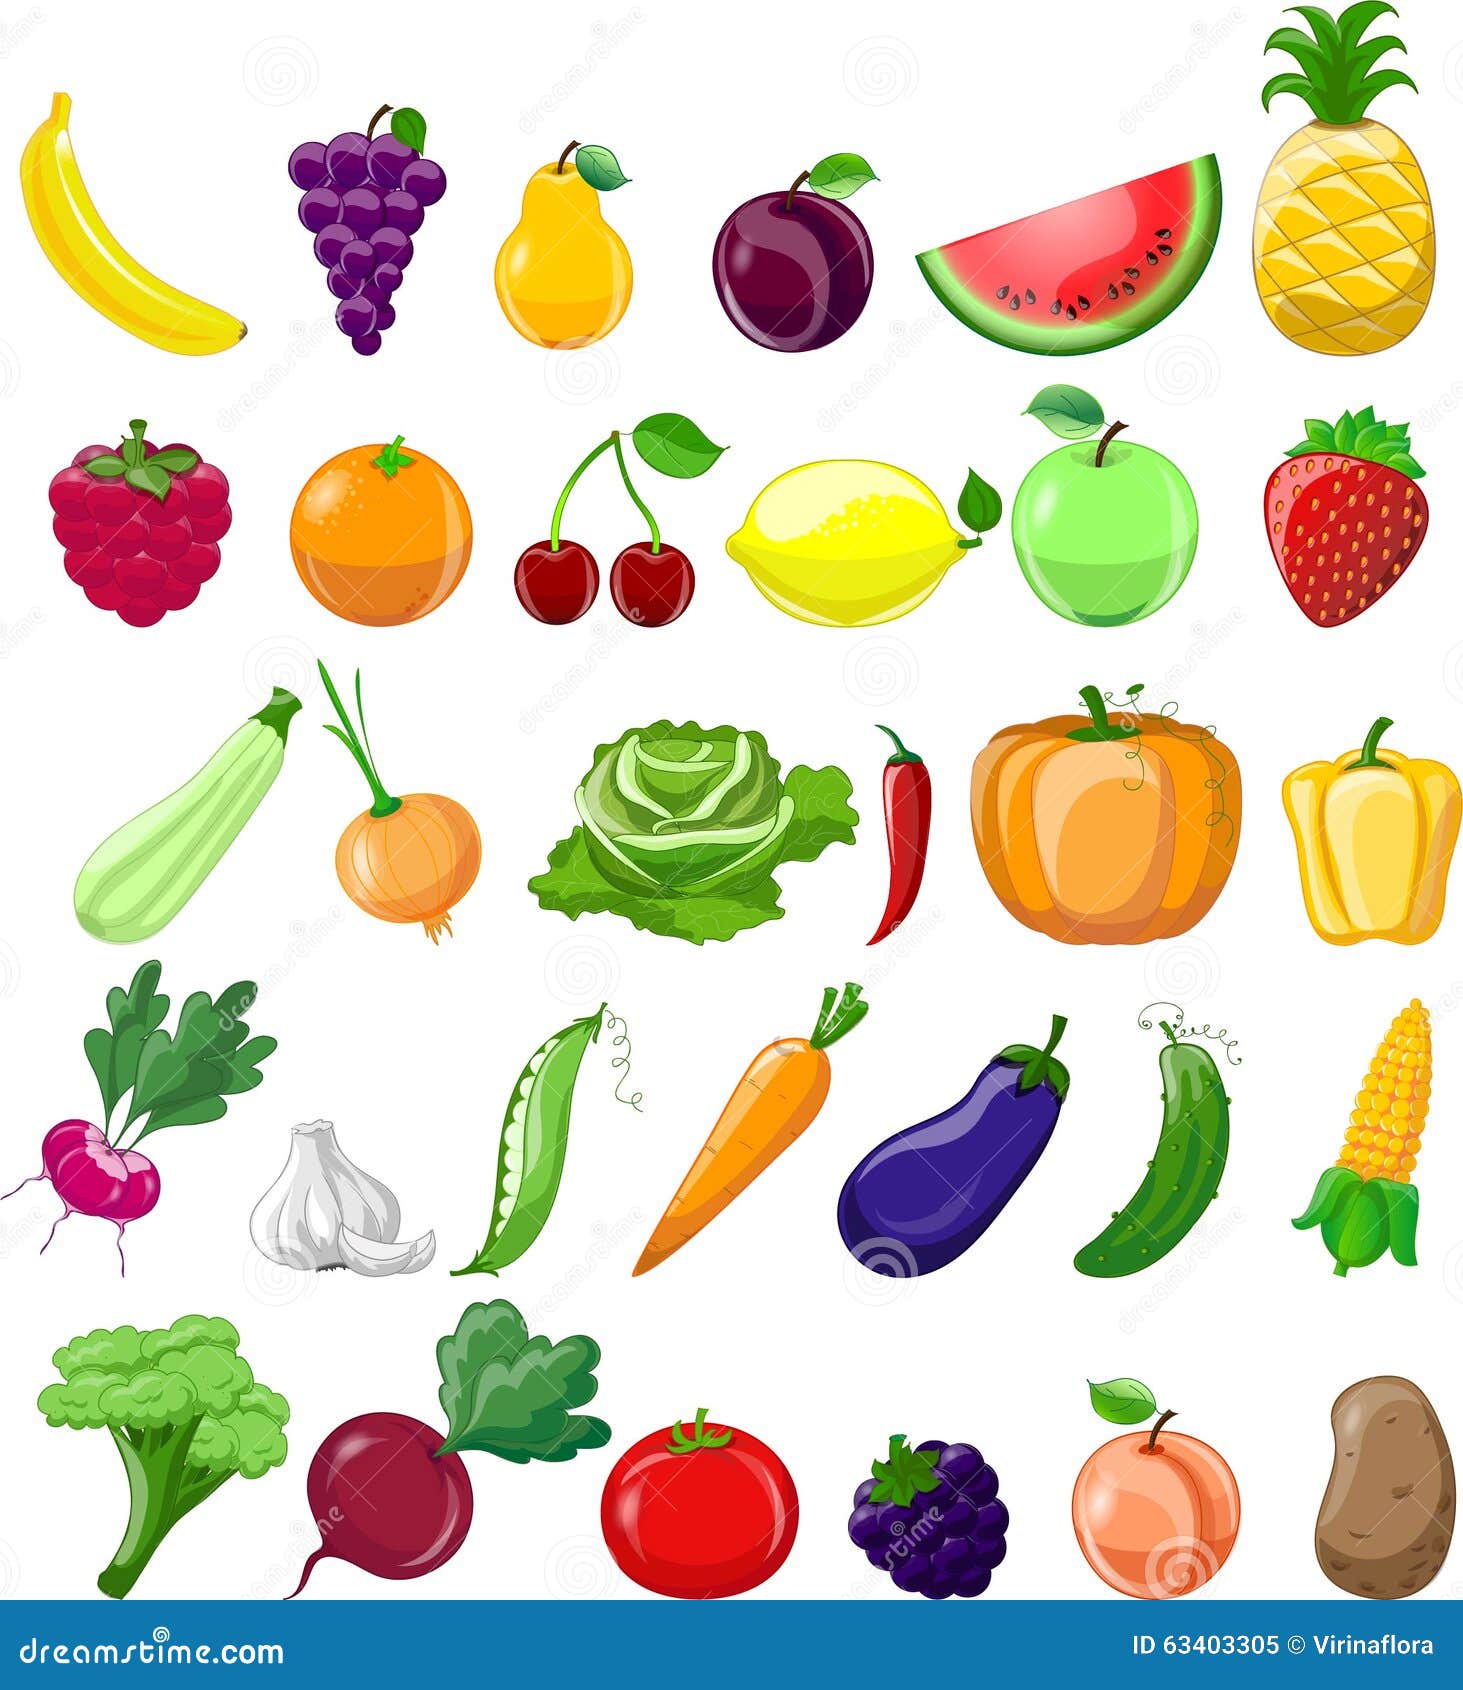 Cartoon Vegetables And Fruits,vector | CartoonDealer.com #62498009